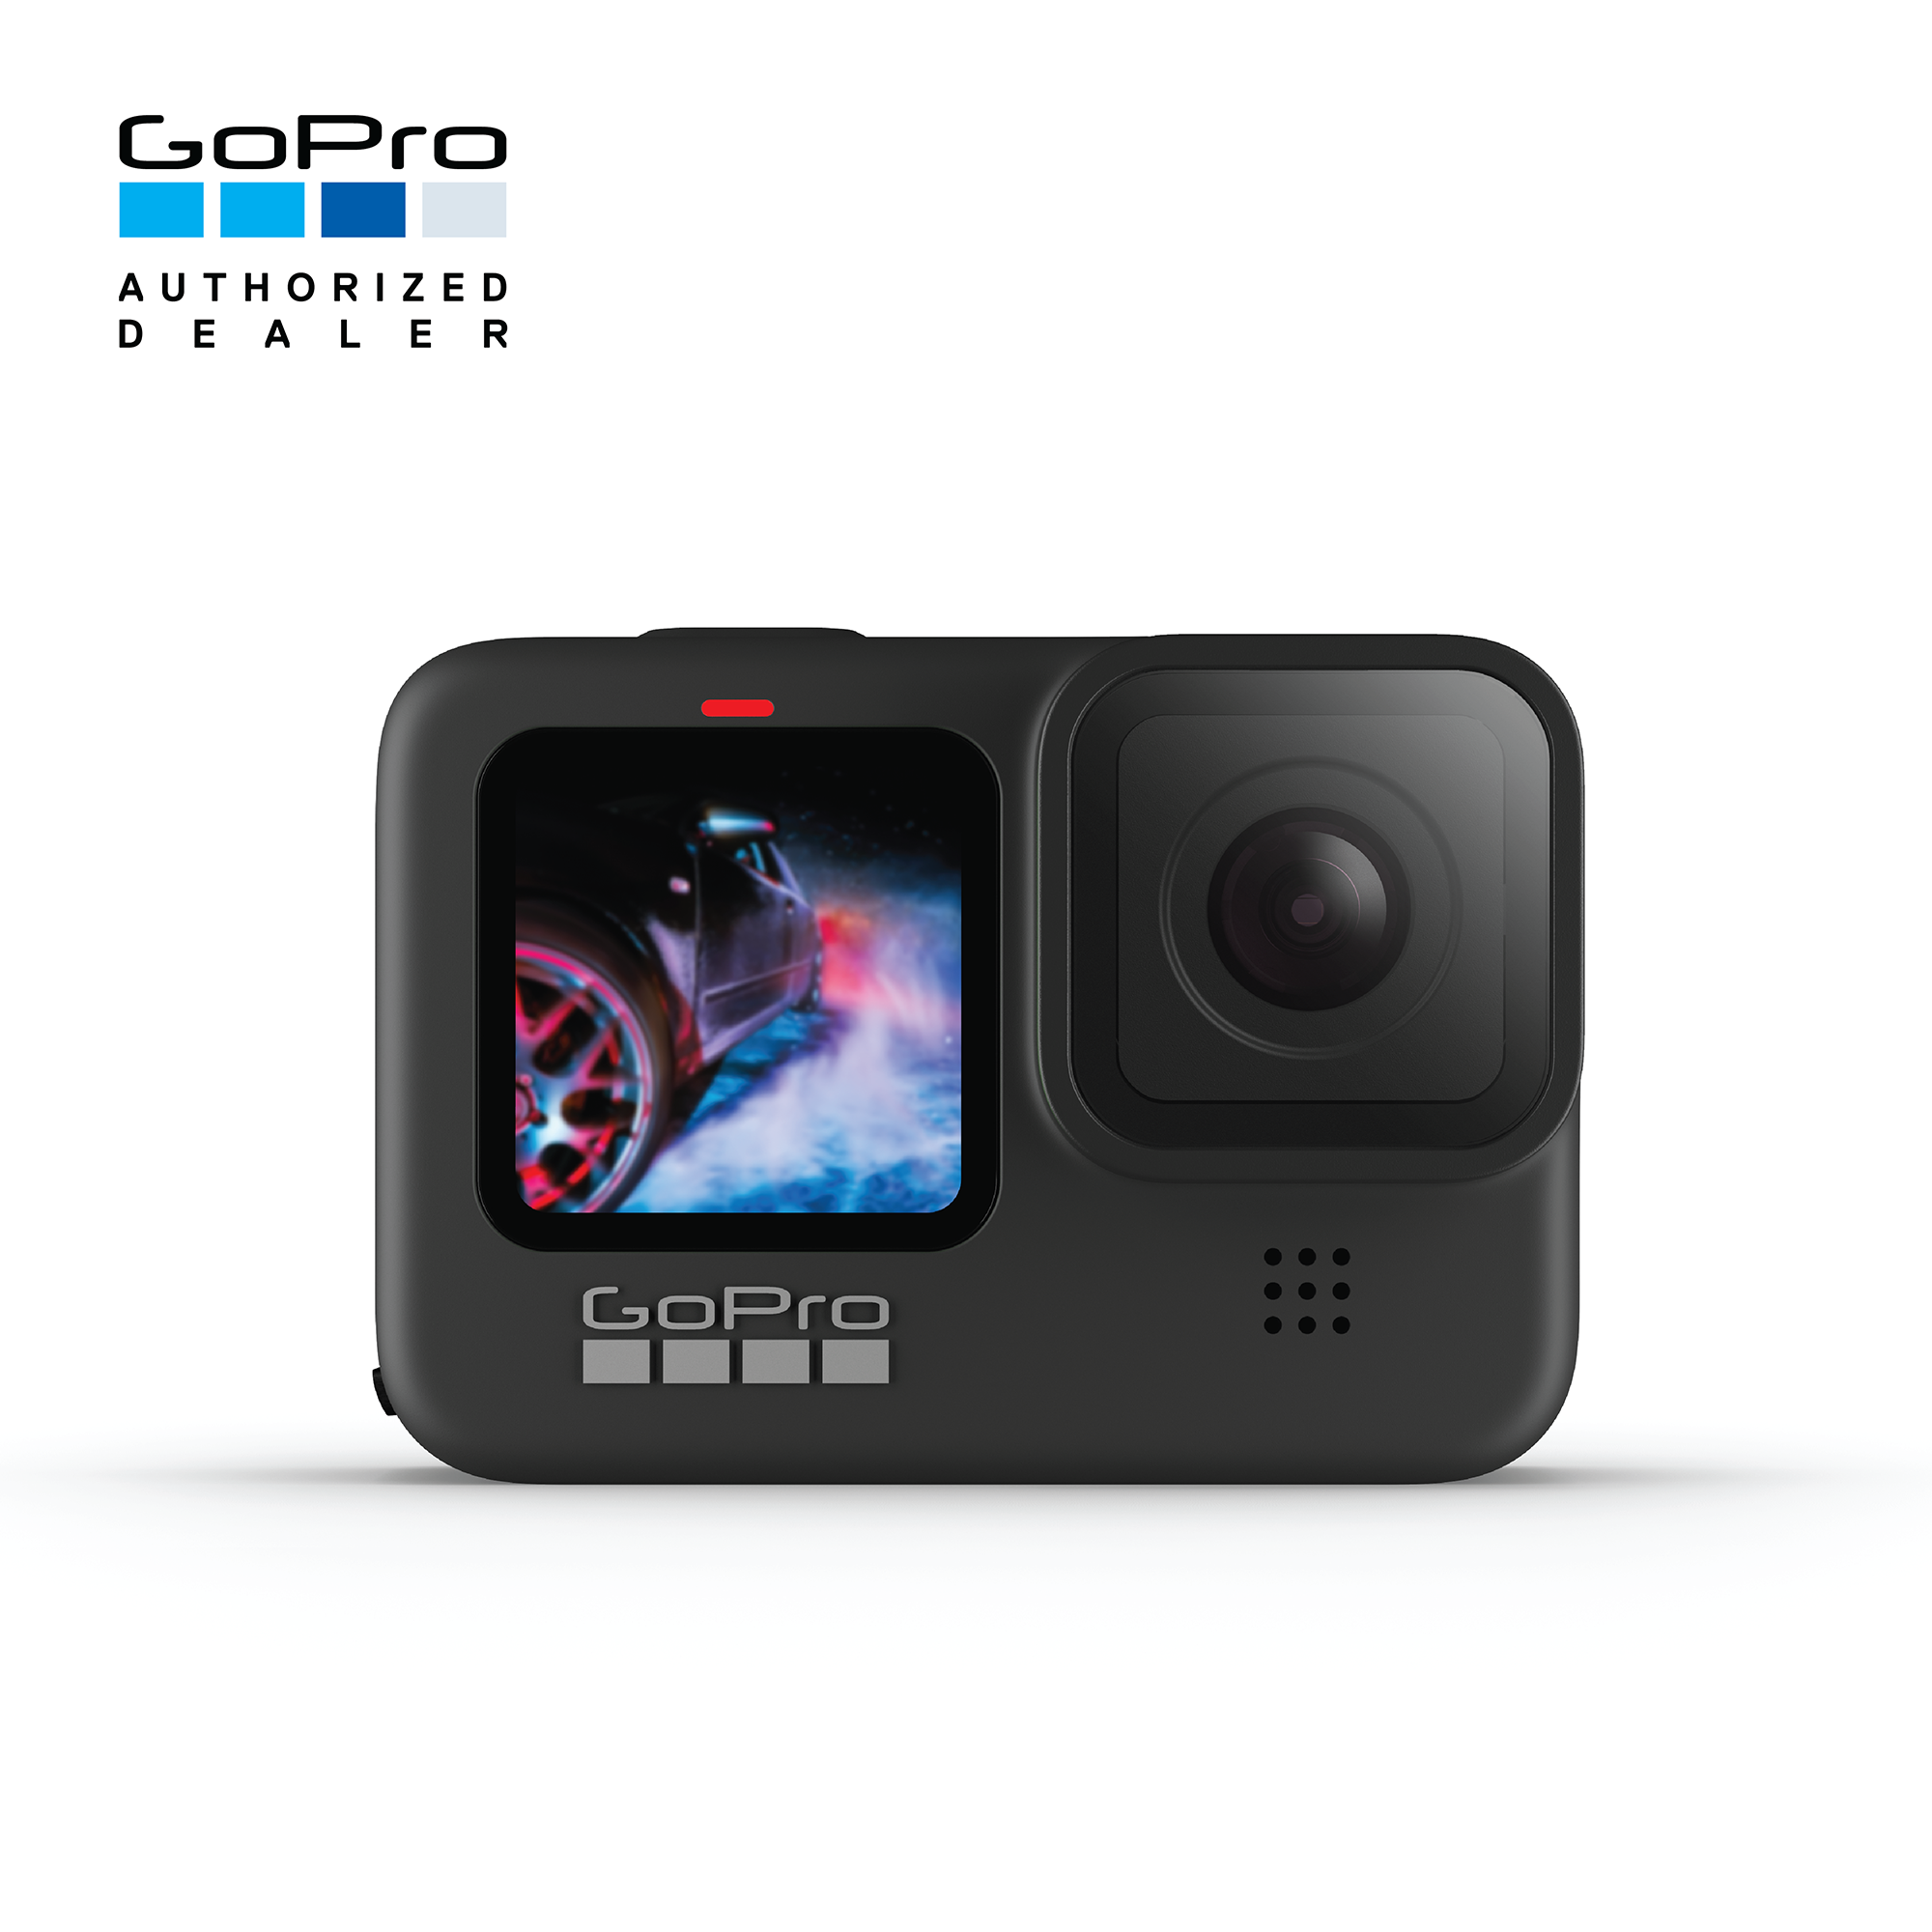 GoPro HERO9 Black กล้อง Action Camera กันน้ำได้สูงสุด 10 เมตร ถ่ายวีดีโอ 5K, Full HD 240fps ภาพนิ่ง 20MP โหมดกันสั่น HyperSmooth 3.0 ในตัว